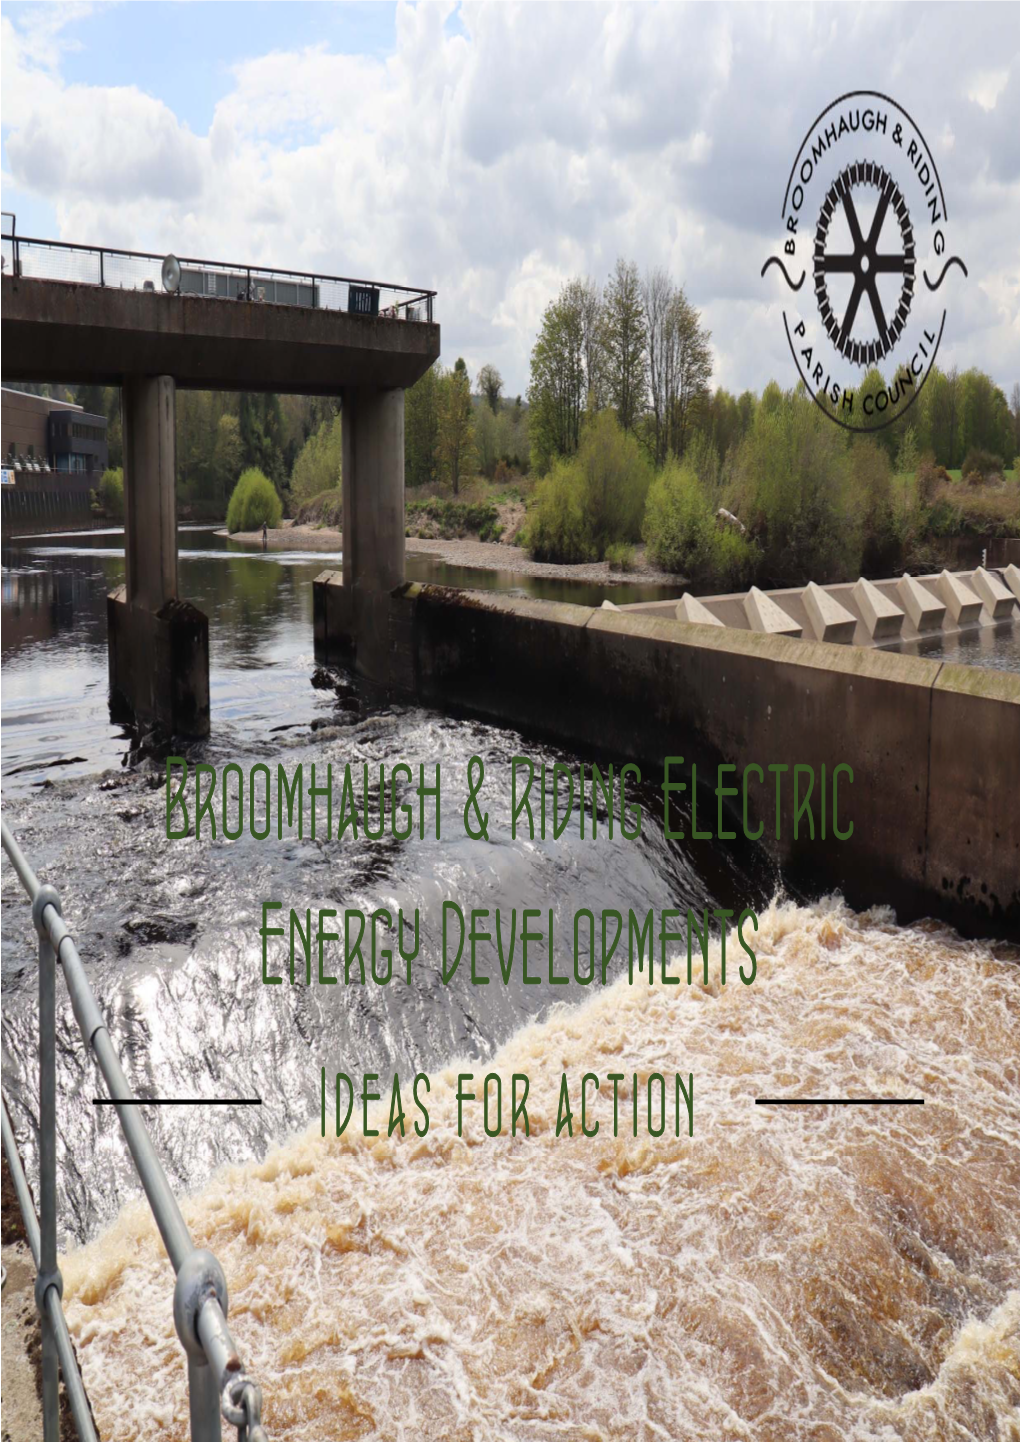 Broomhaugh & Riding Electric Energy Developments